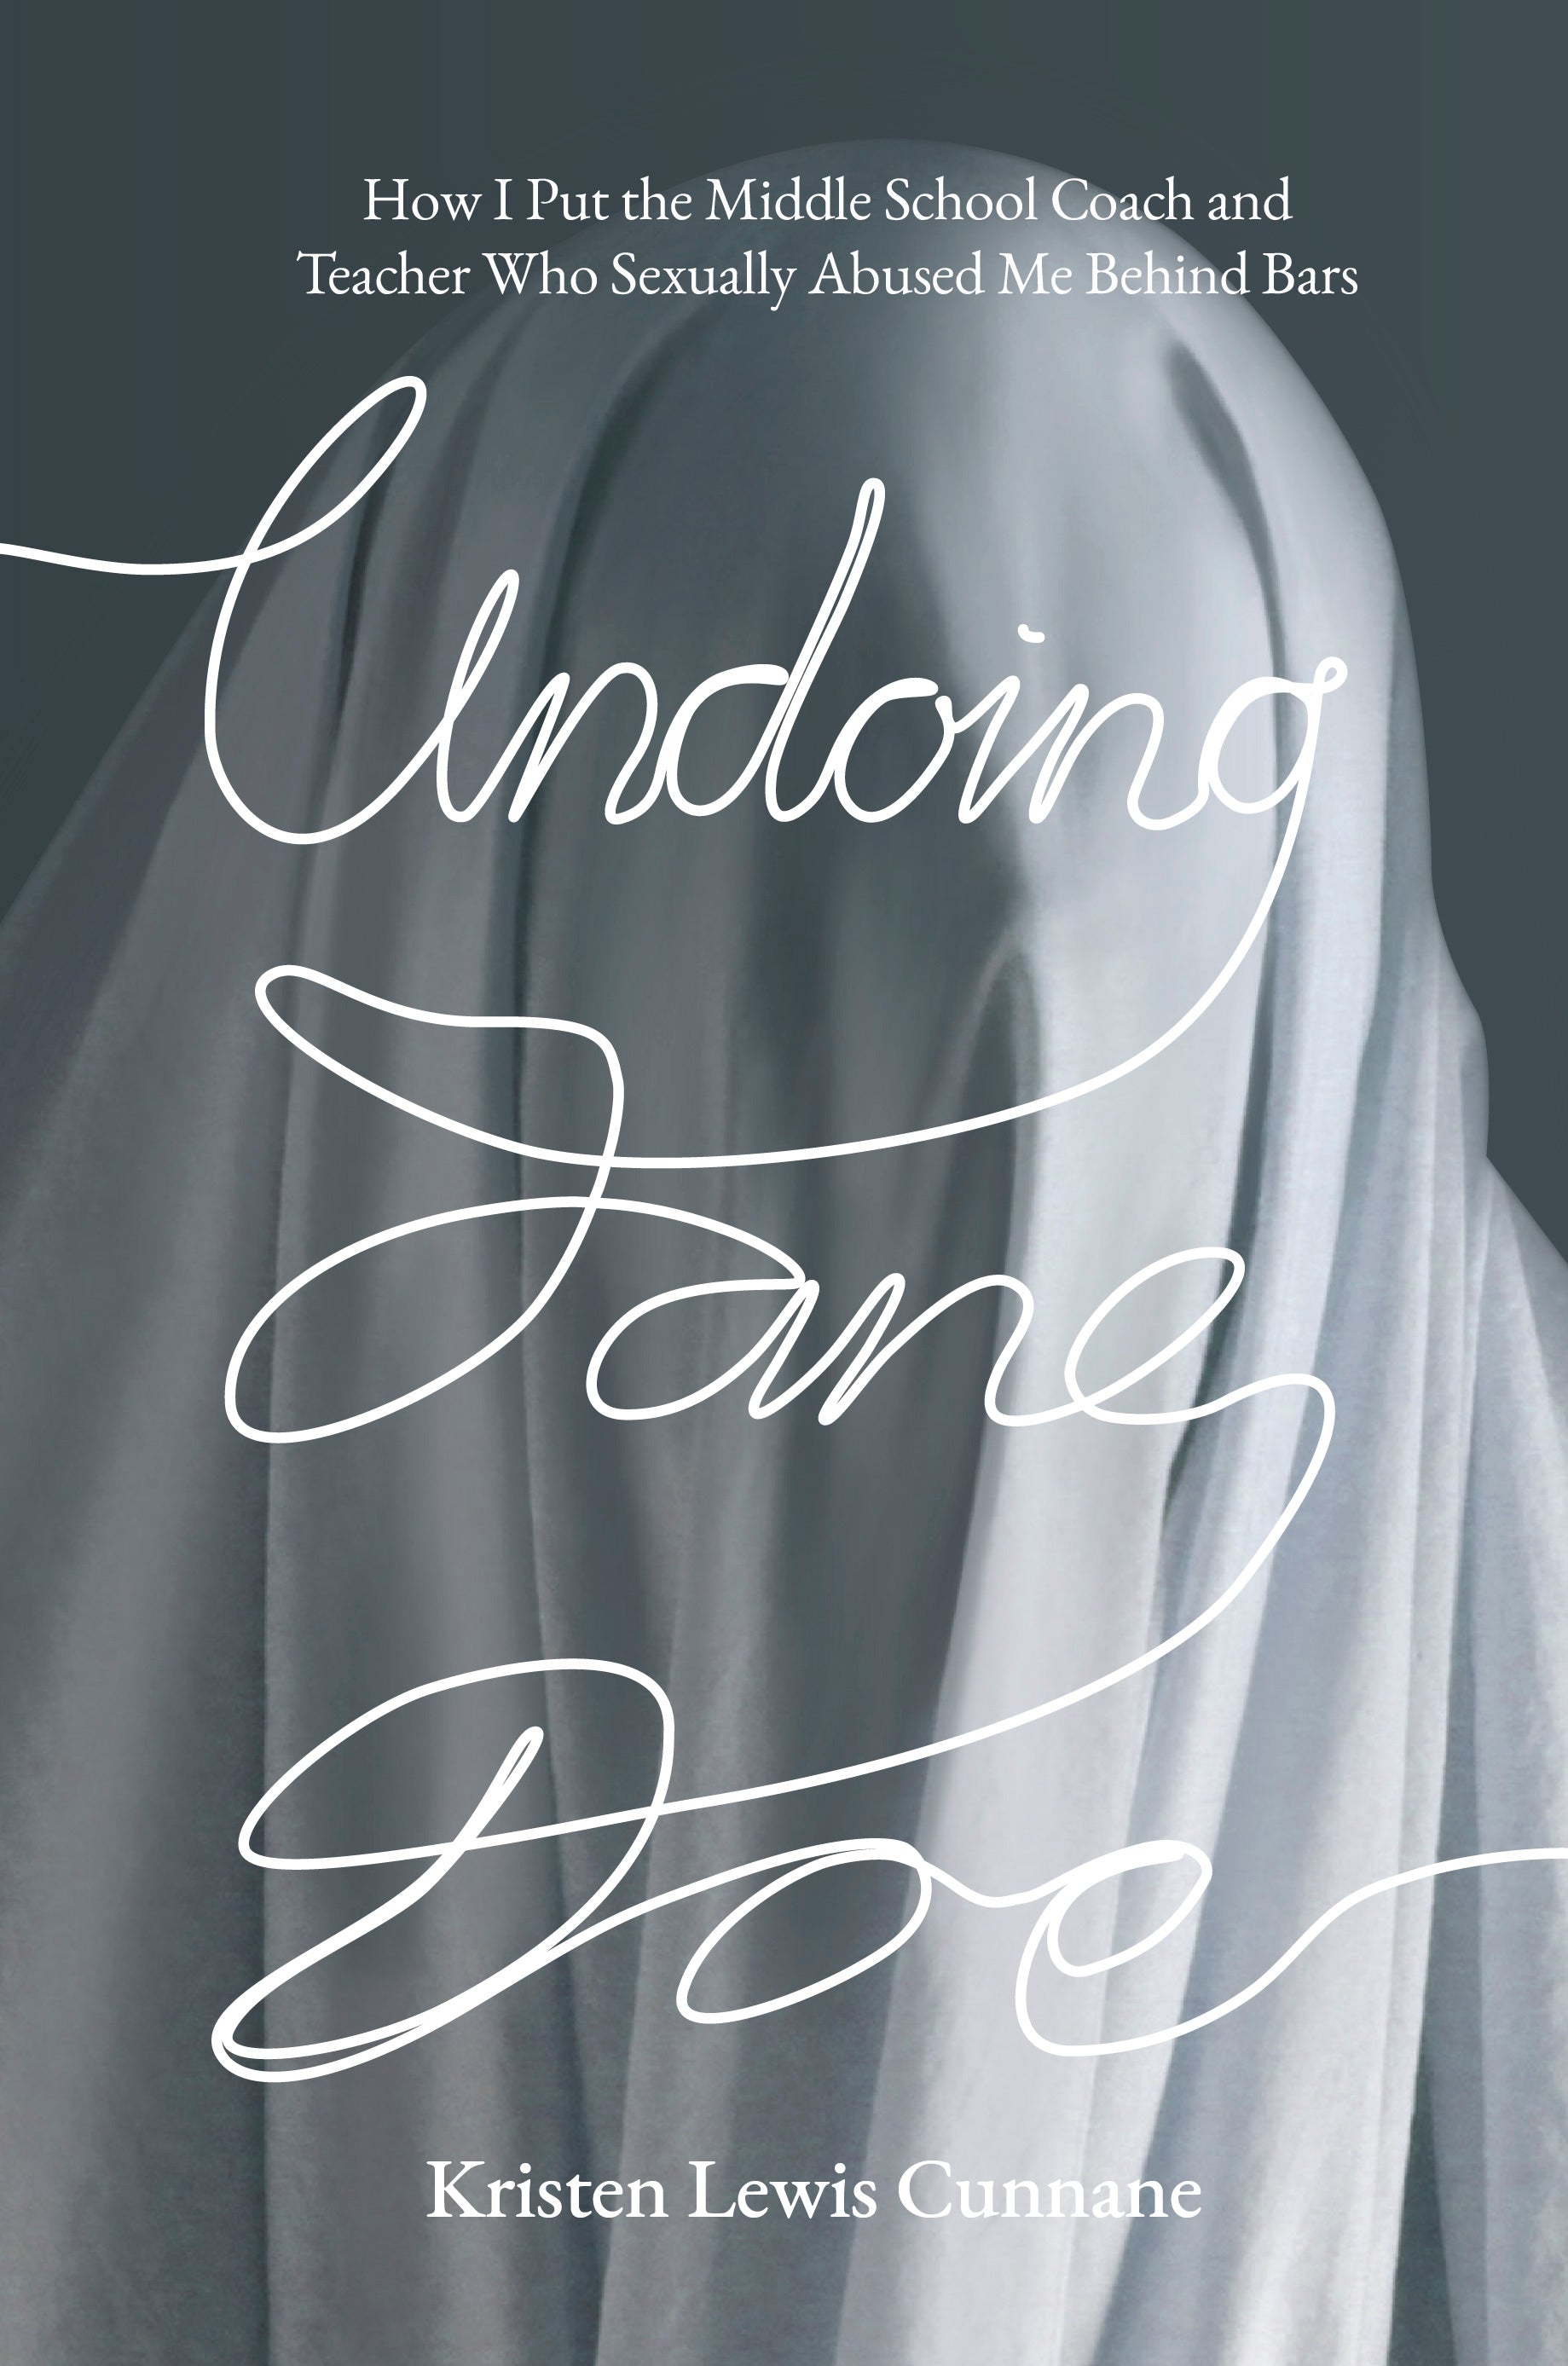 Kristen Cunnane’s “Undoing Jane Doe” tops as the Sunbury Press bestseller for April